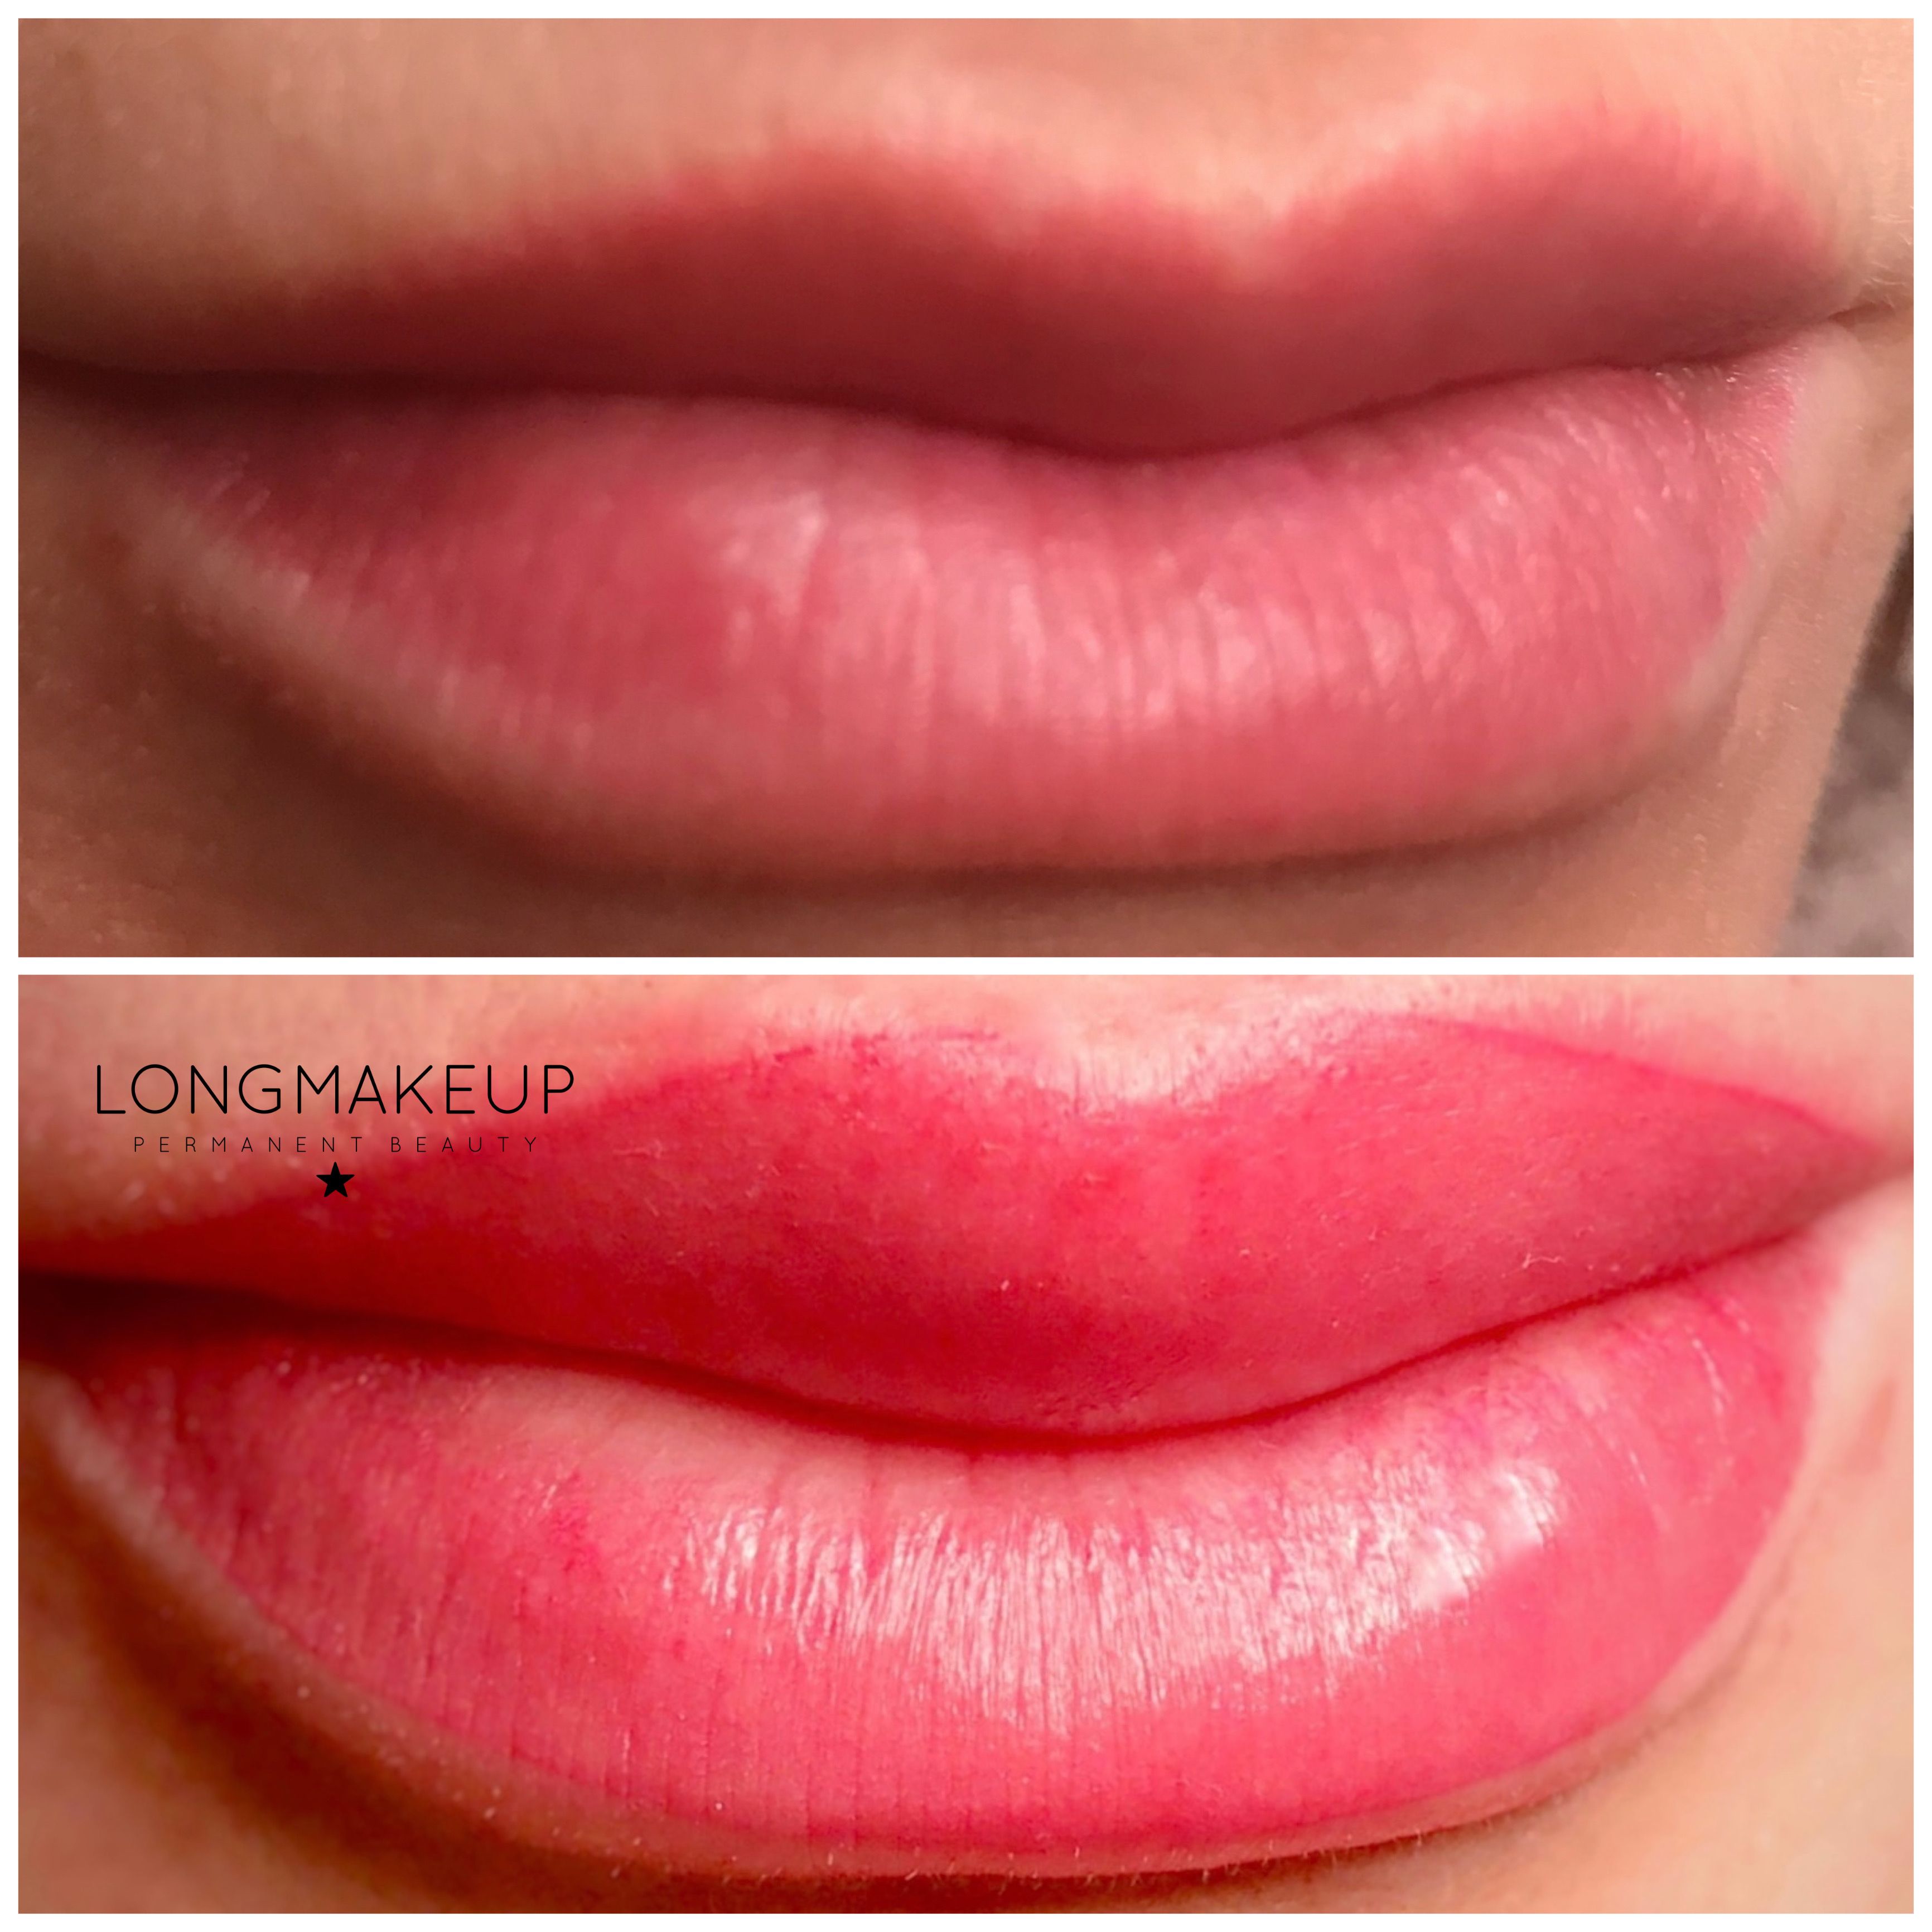 Lip blush color and shape correction